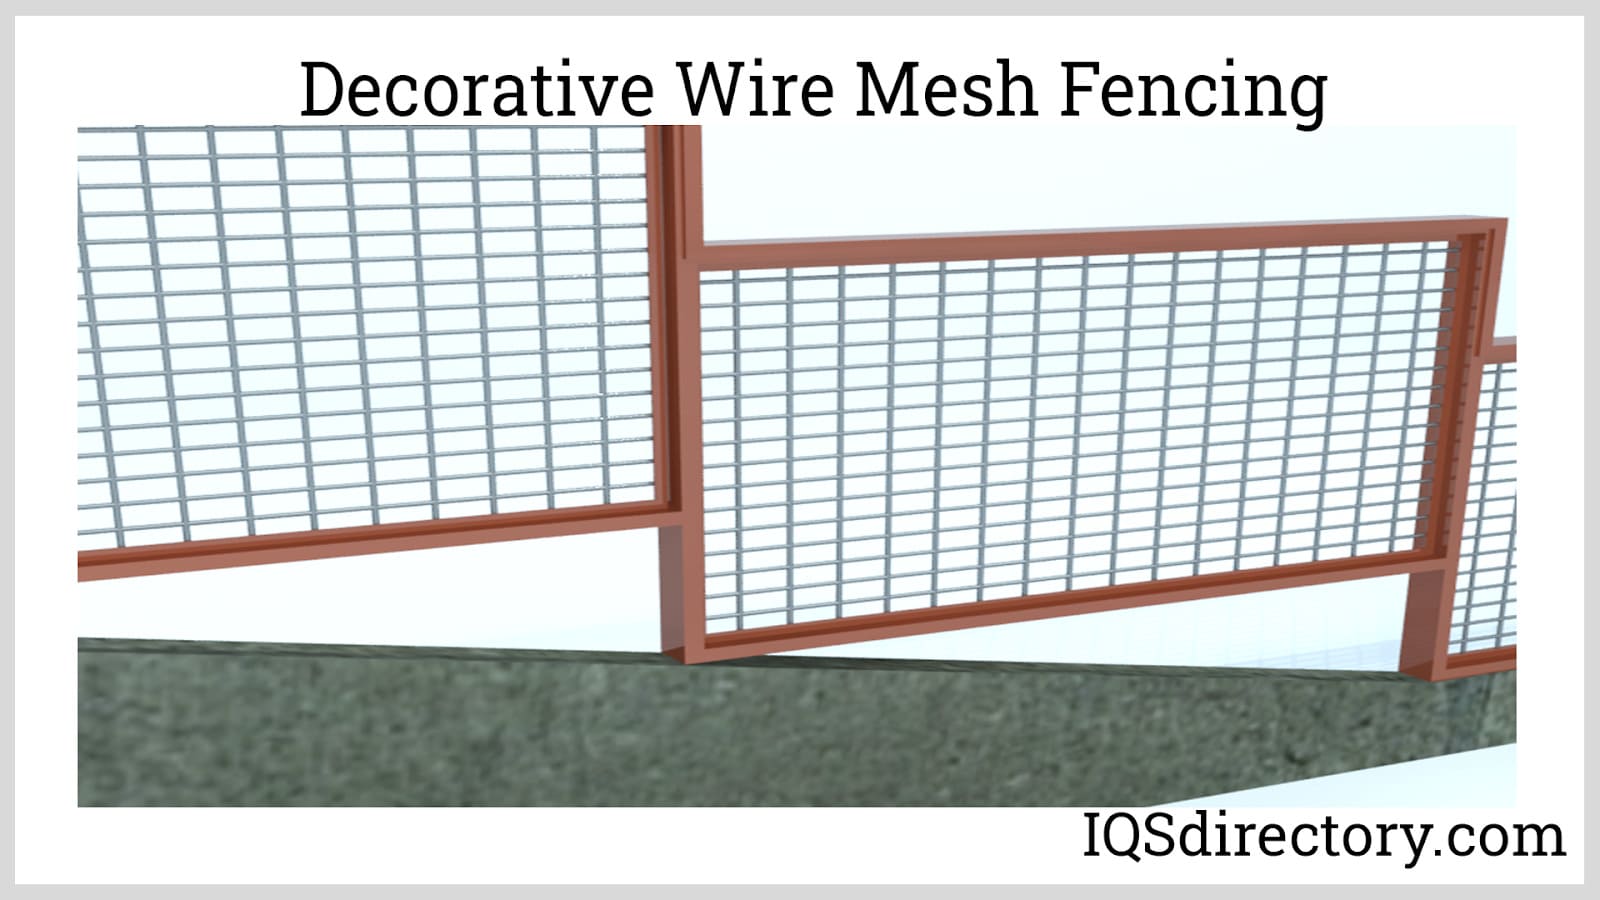 Decorative Wire Mesh Fencing